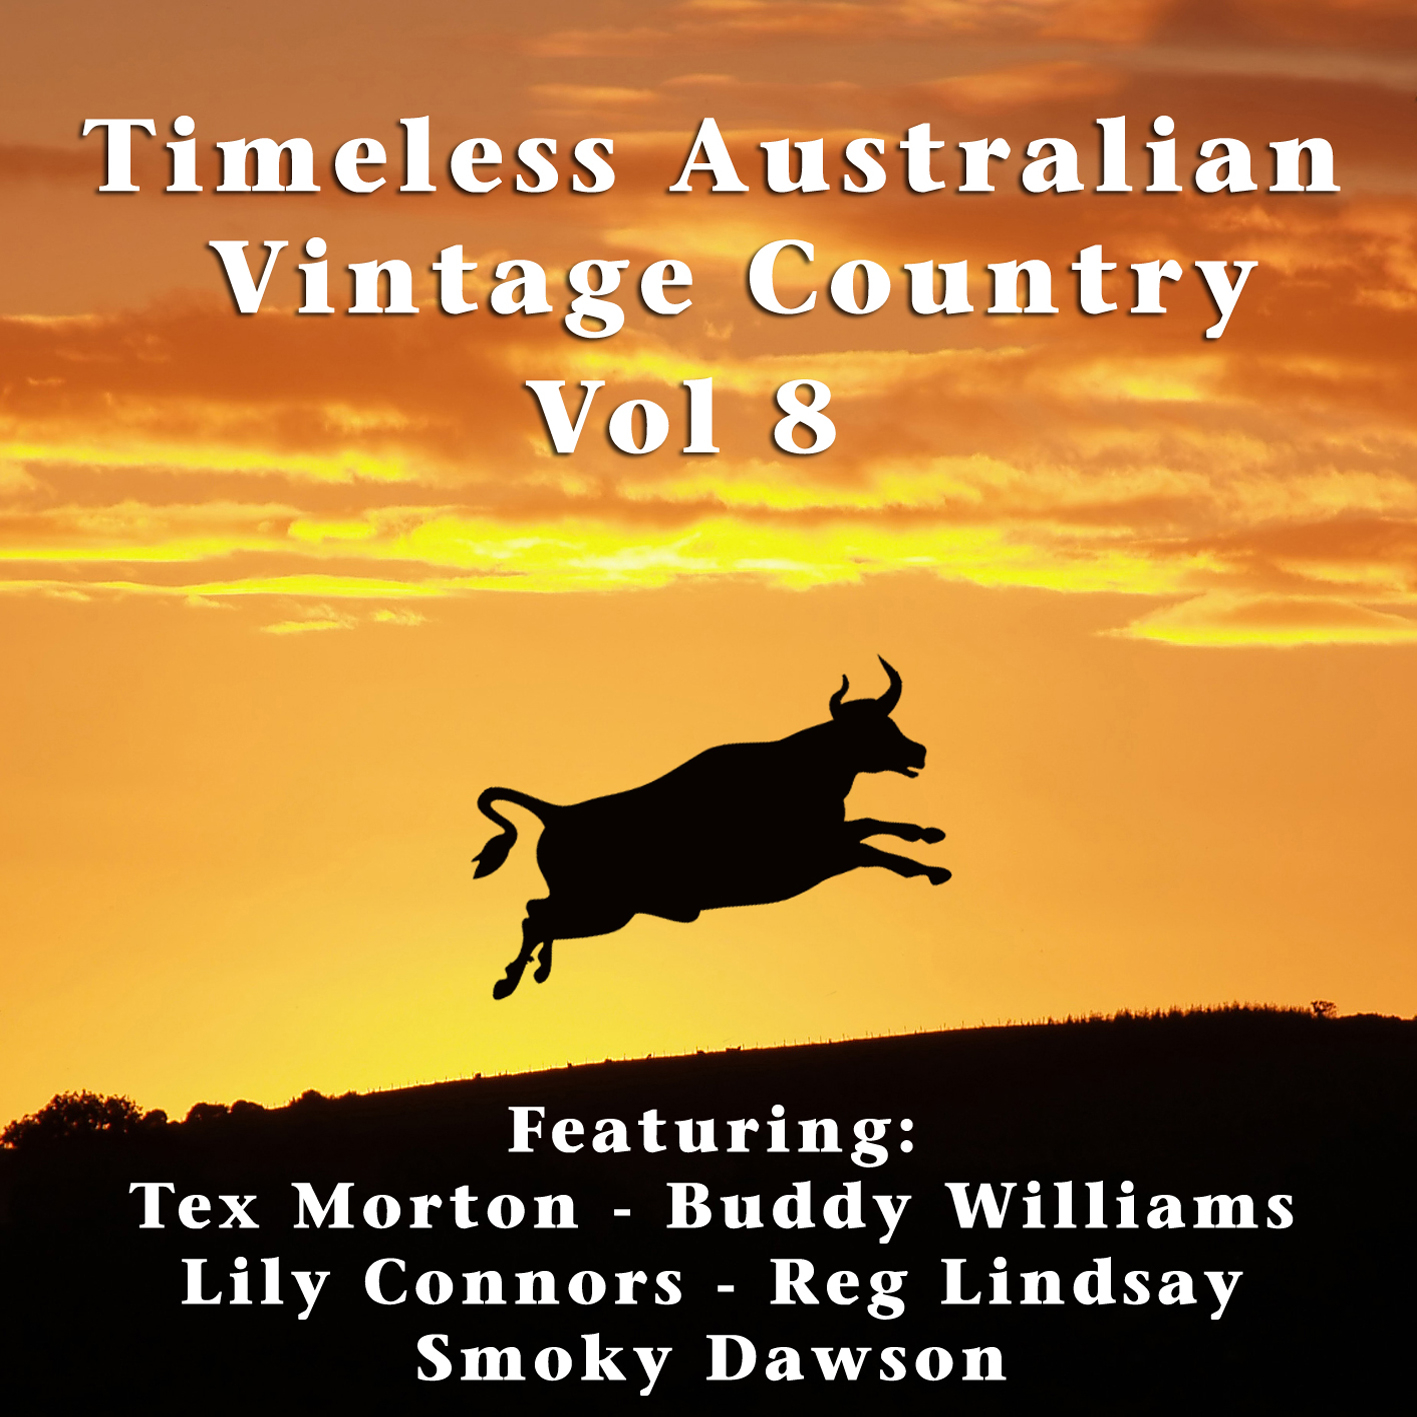 Timeless Australian Vintage Country Vol. 8